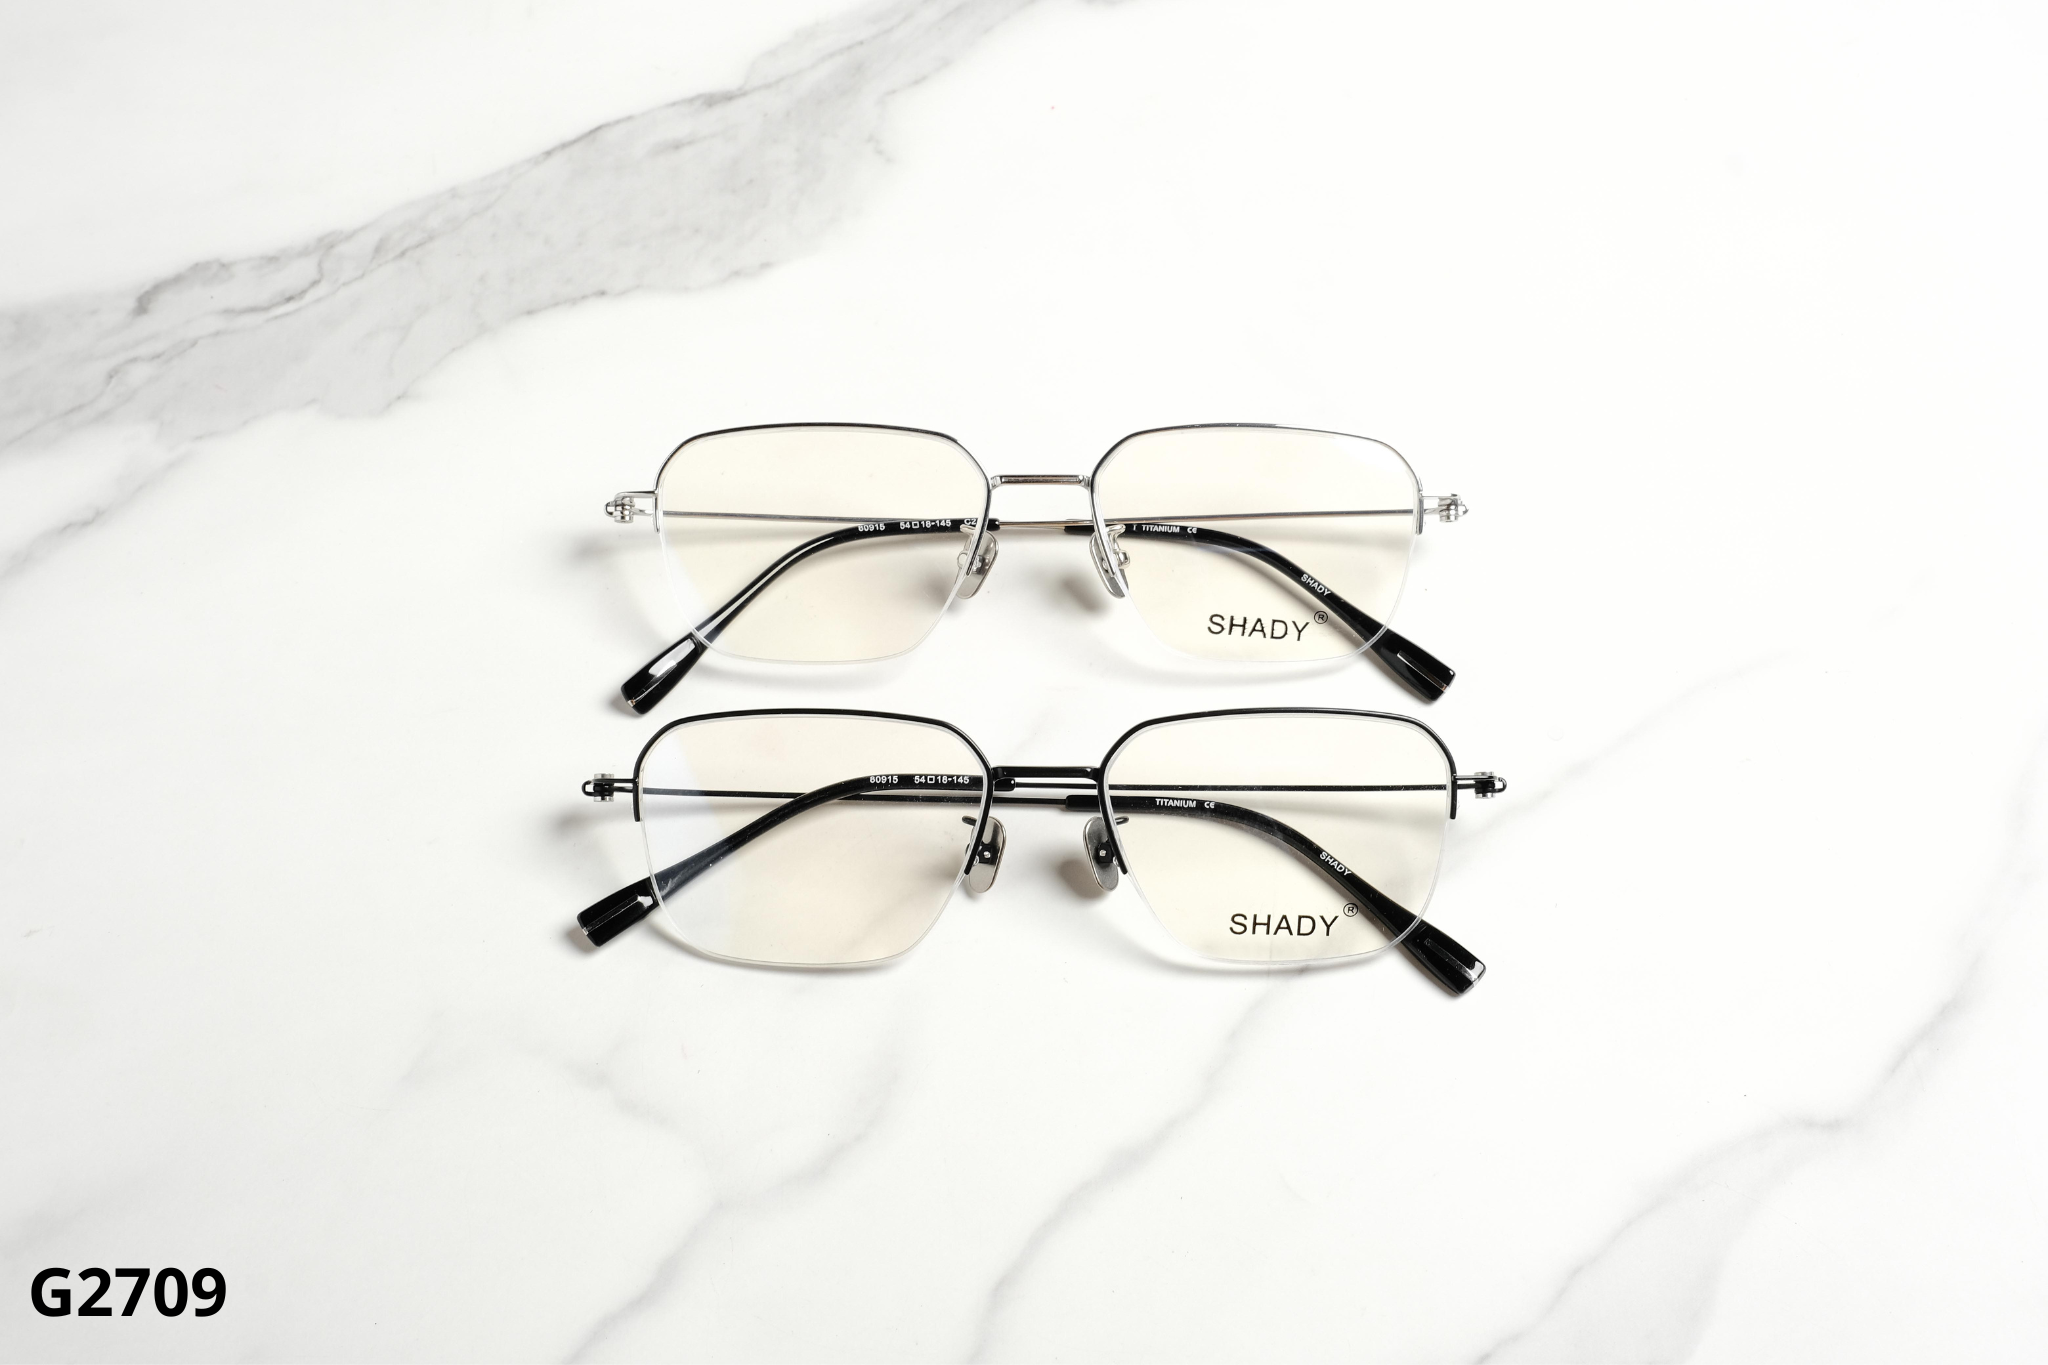  SHADY Eyewear - Glasses - G2709 